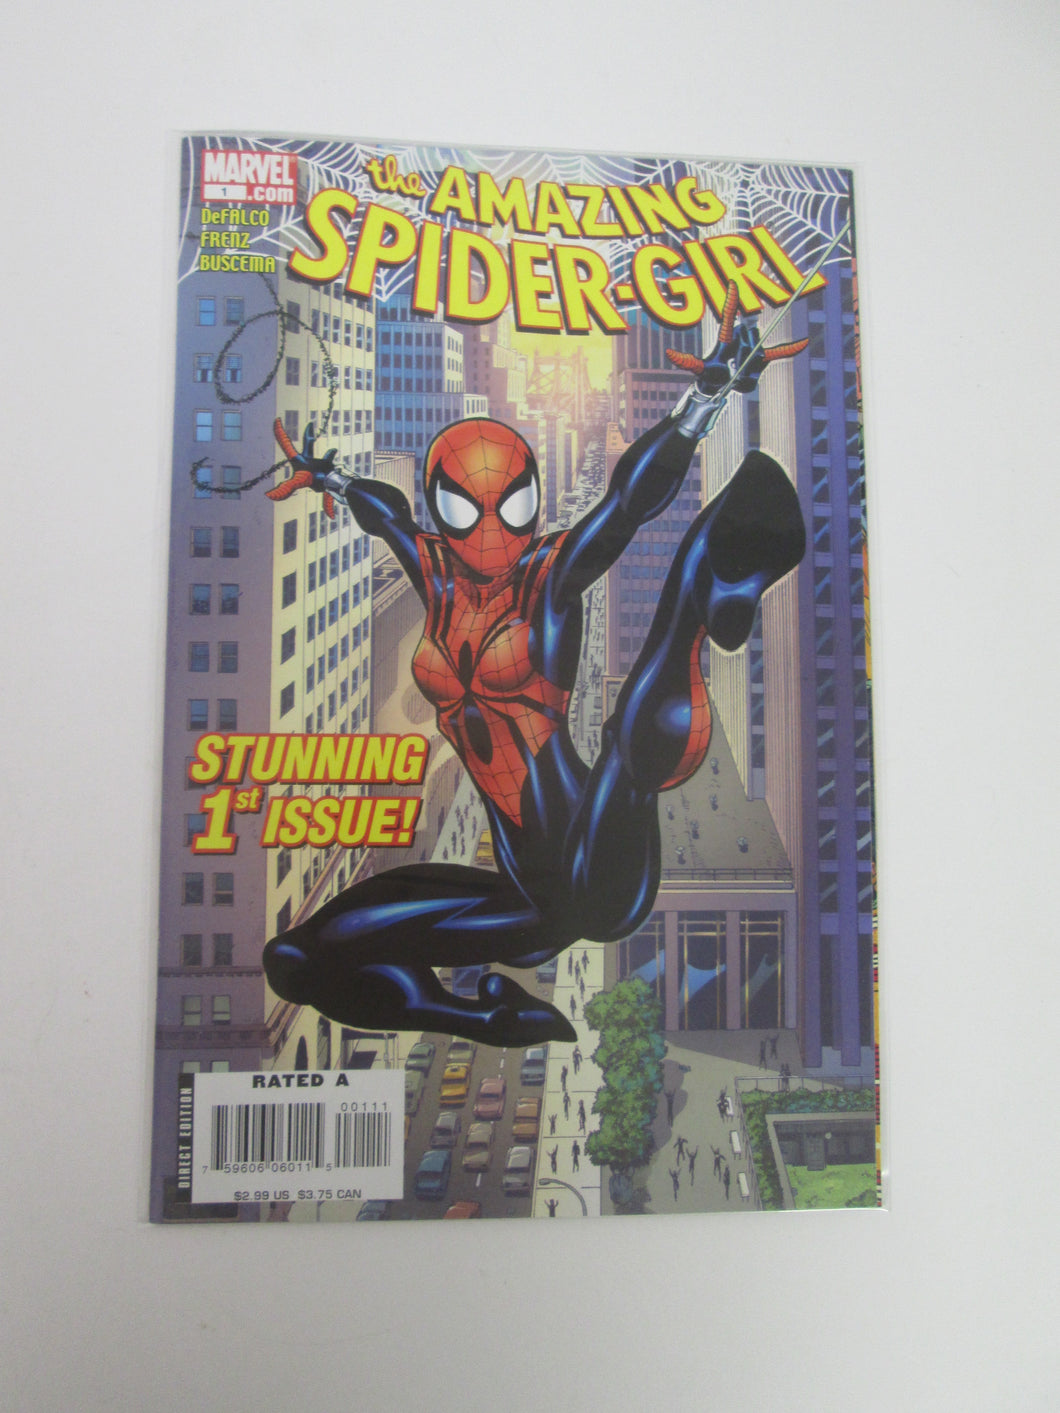 Amazing Spider-Girl # 1 (Marvel)